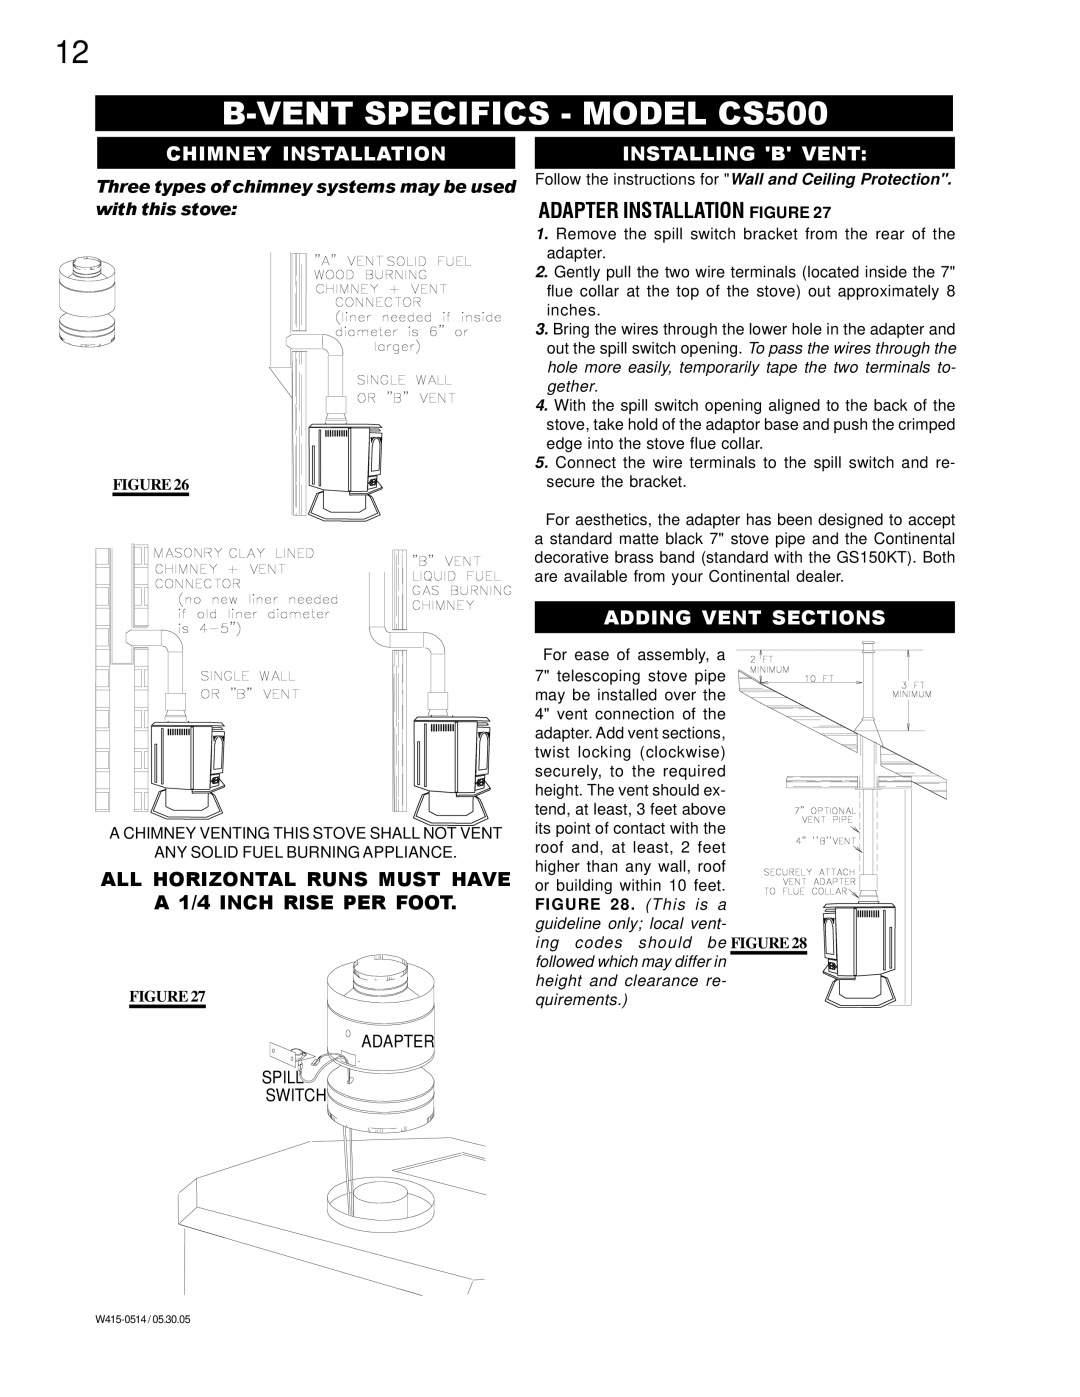 Continental CDVS500-P manual B-VENTSPECIFICS - MODEL CS500, Chimney Installation, Installing B Vent, Adding Vent Sections 